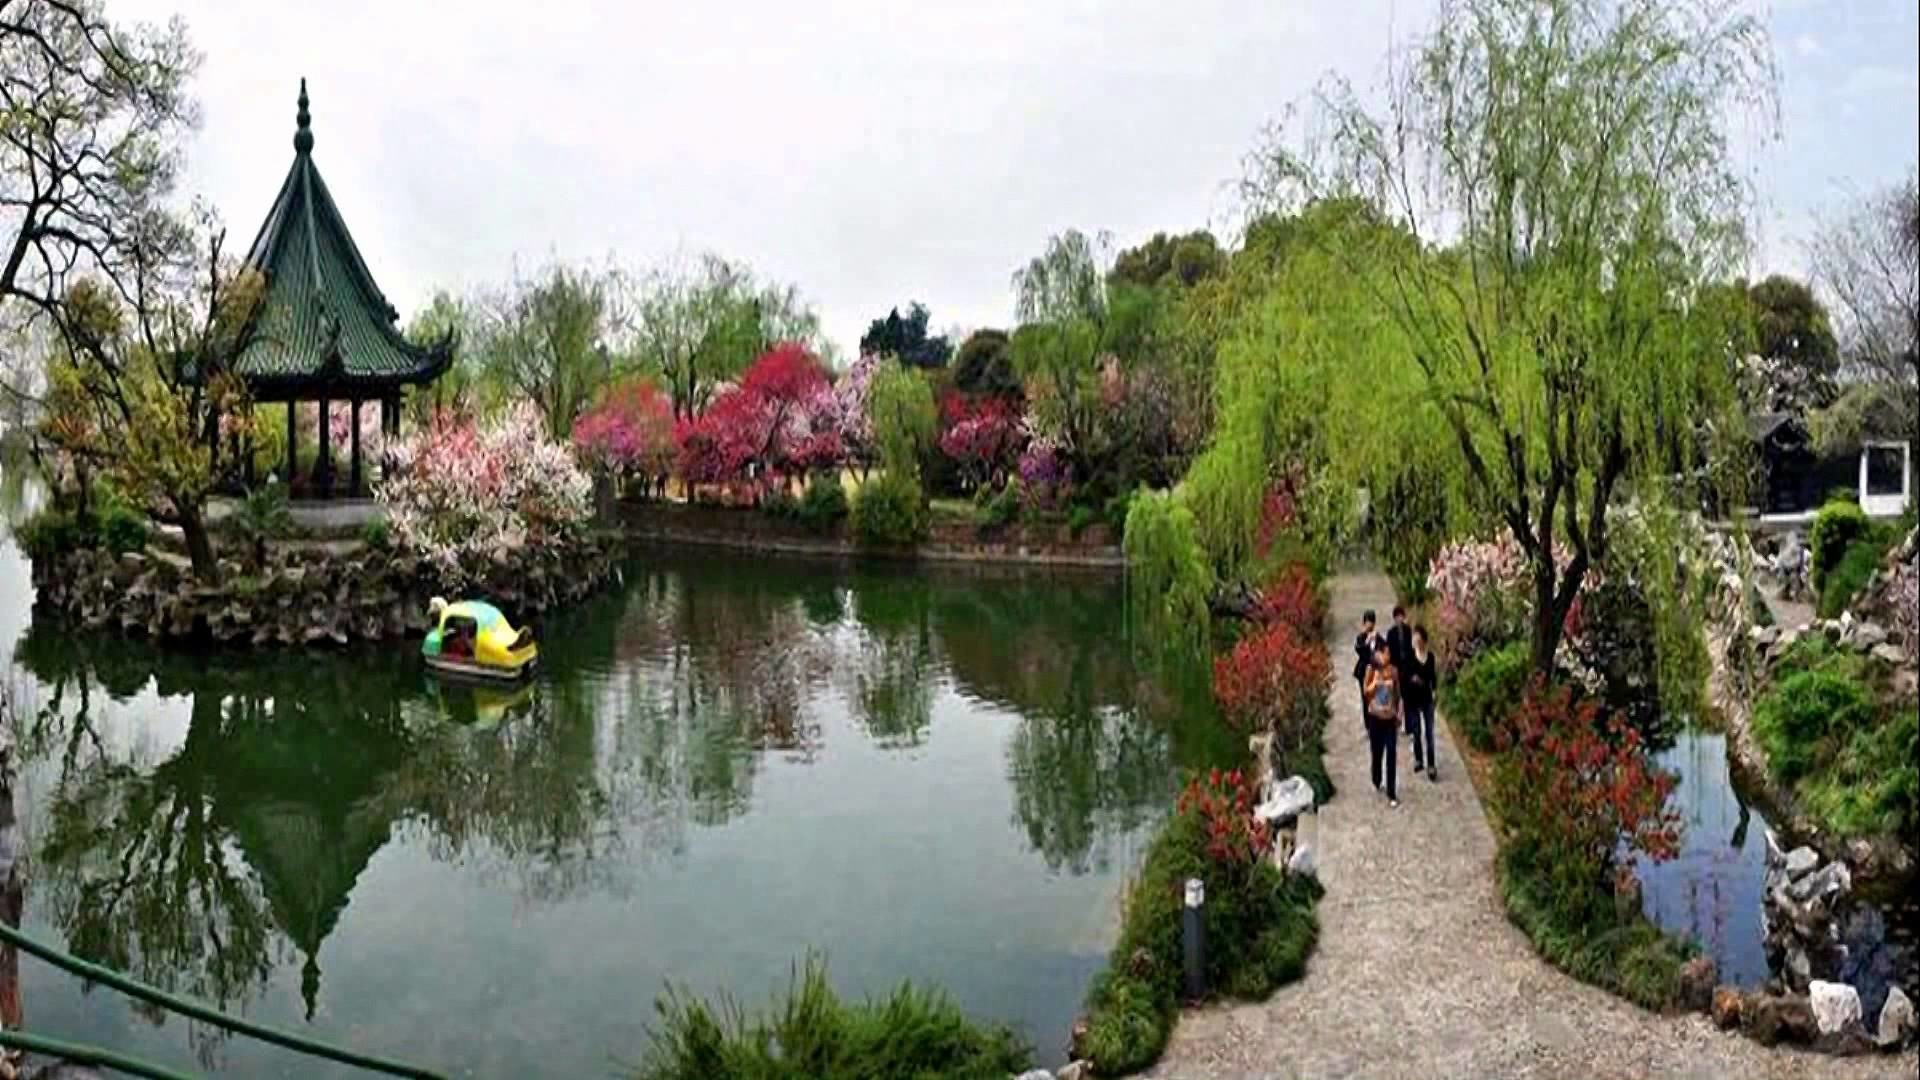 1920x1080 Chinese Backyard Design chinese garden backyard download Garden Design With  So Beautiful Landscape China Hdp Youtube